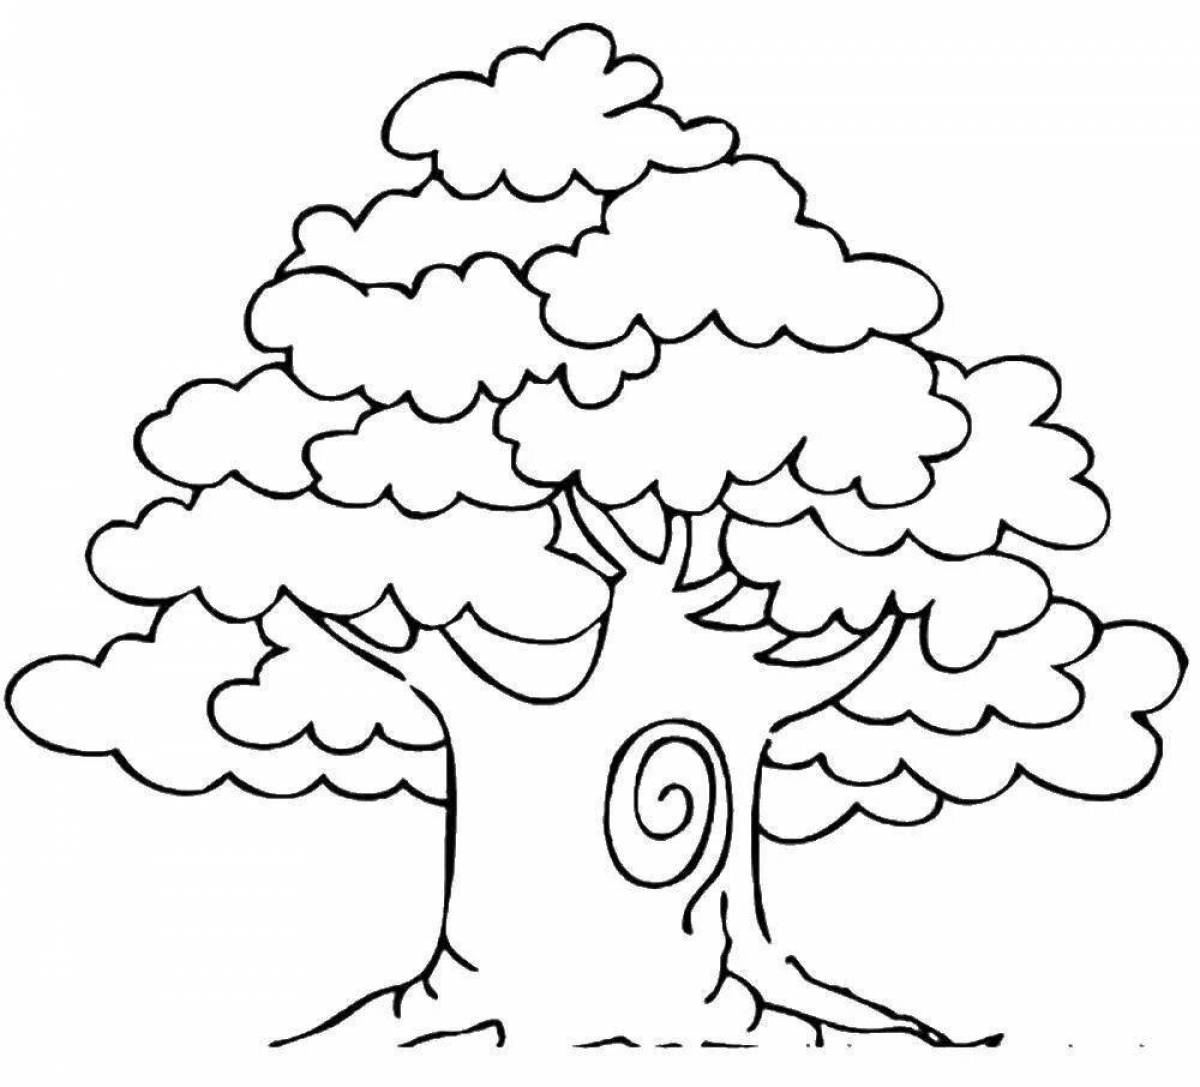 Яркий рисунок дерева для детей